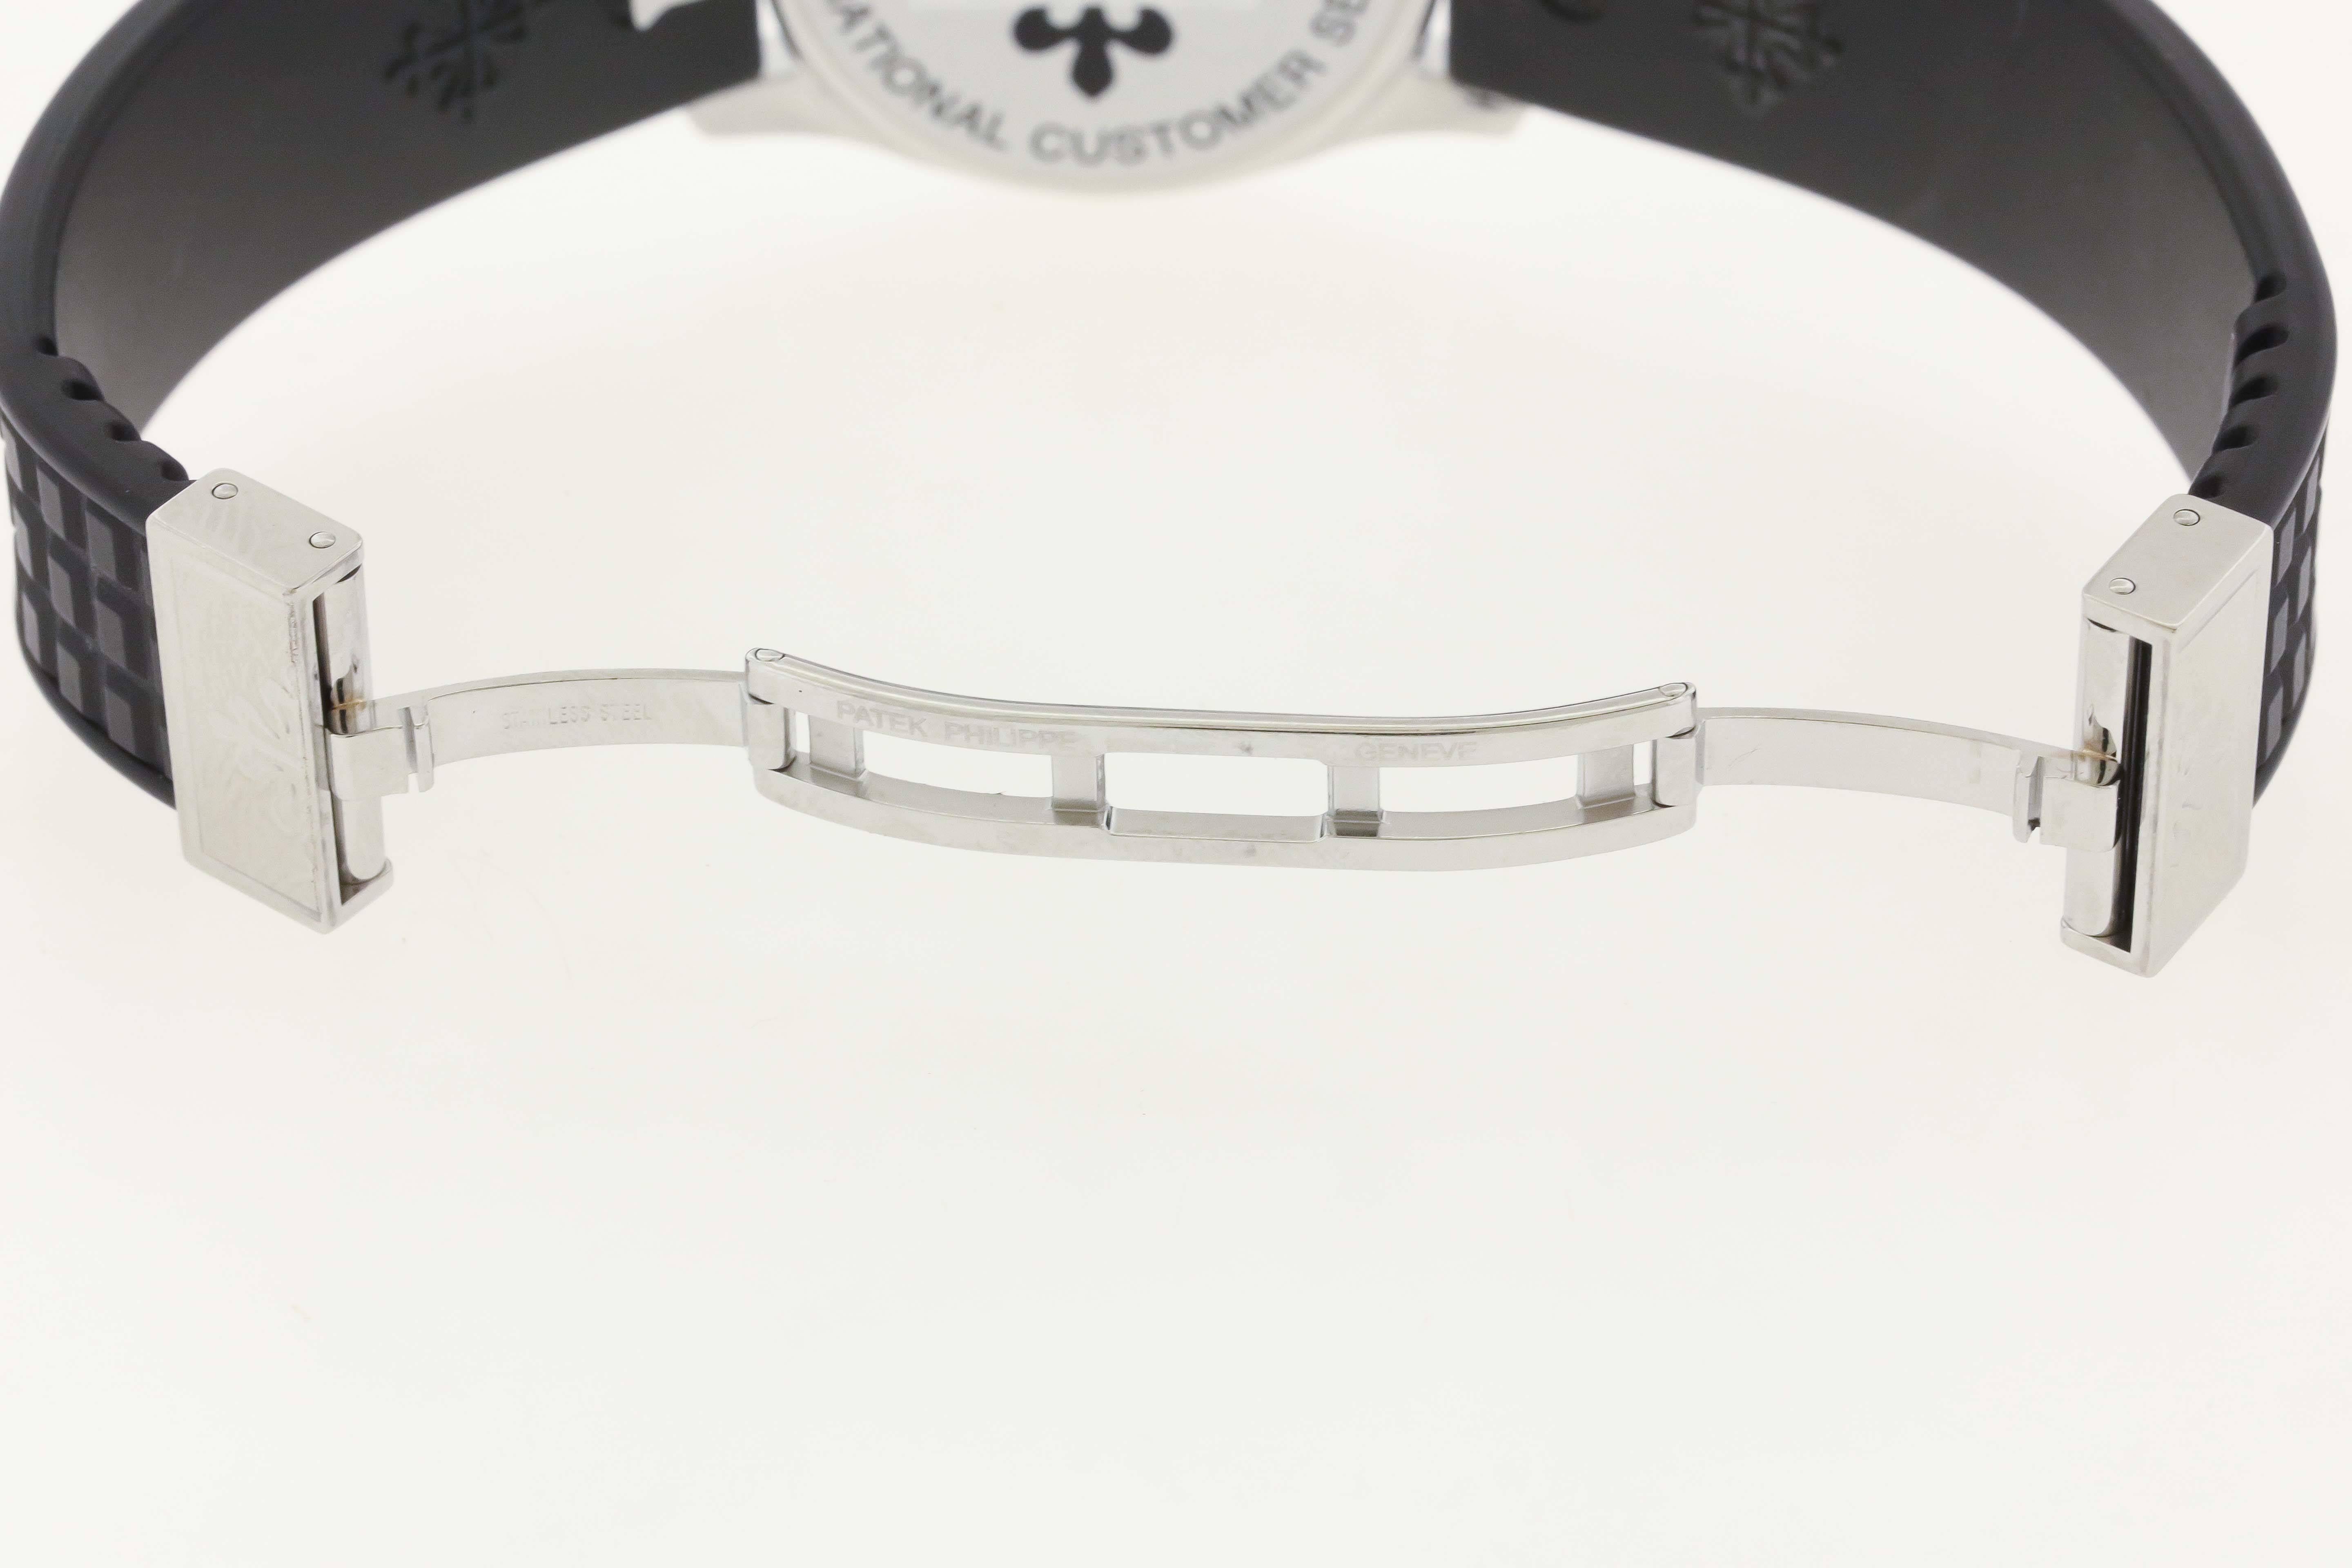 Patek Philippe Lady's Stainless Steel Diamond Aquanaut Wristwatch Ref 4961A 1